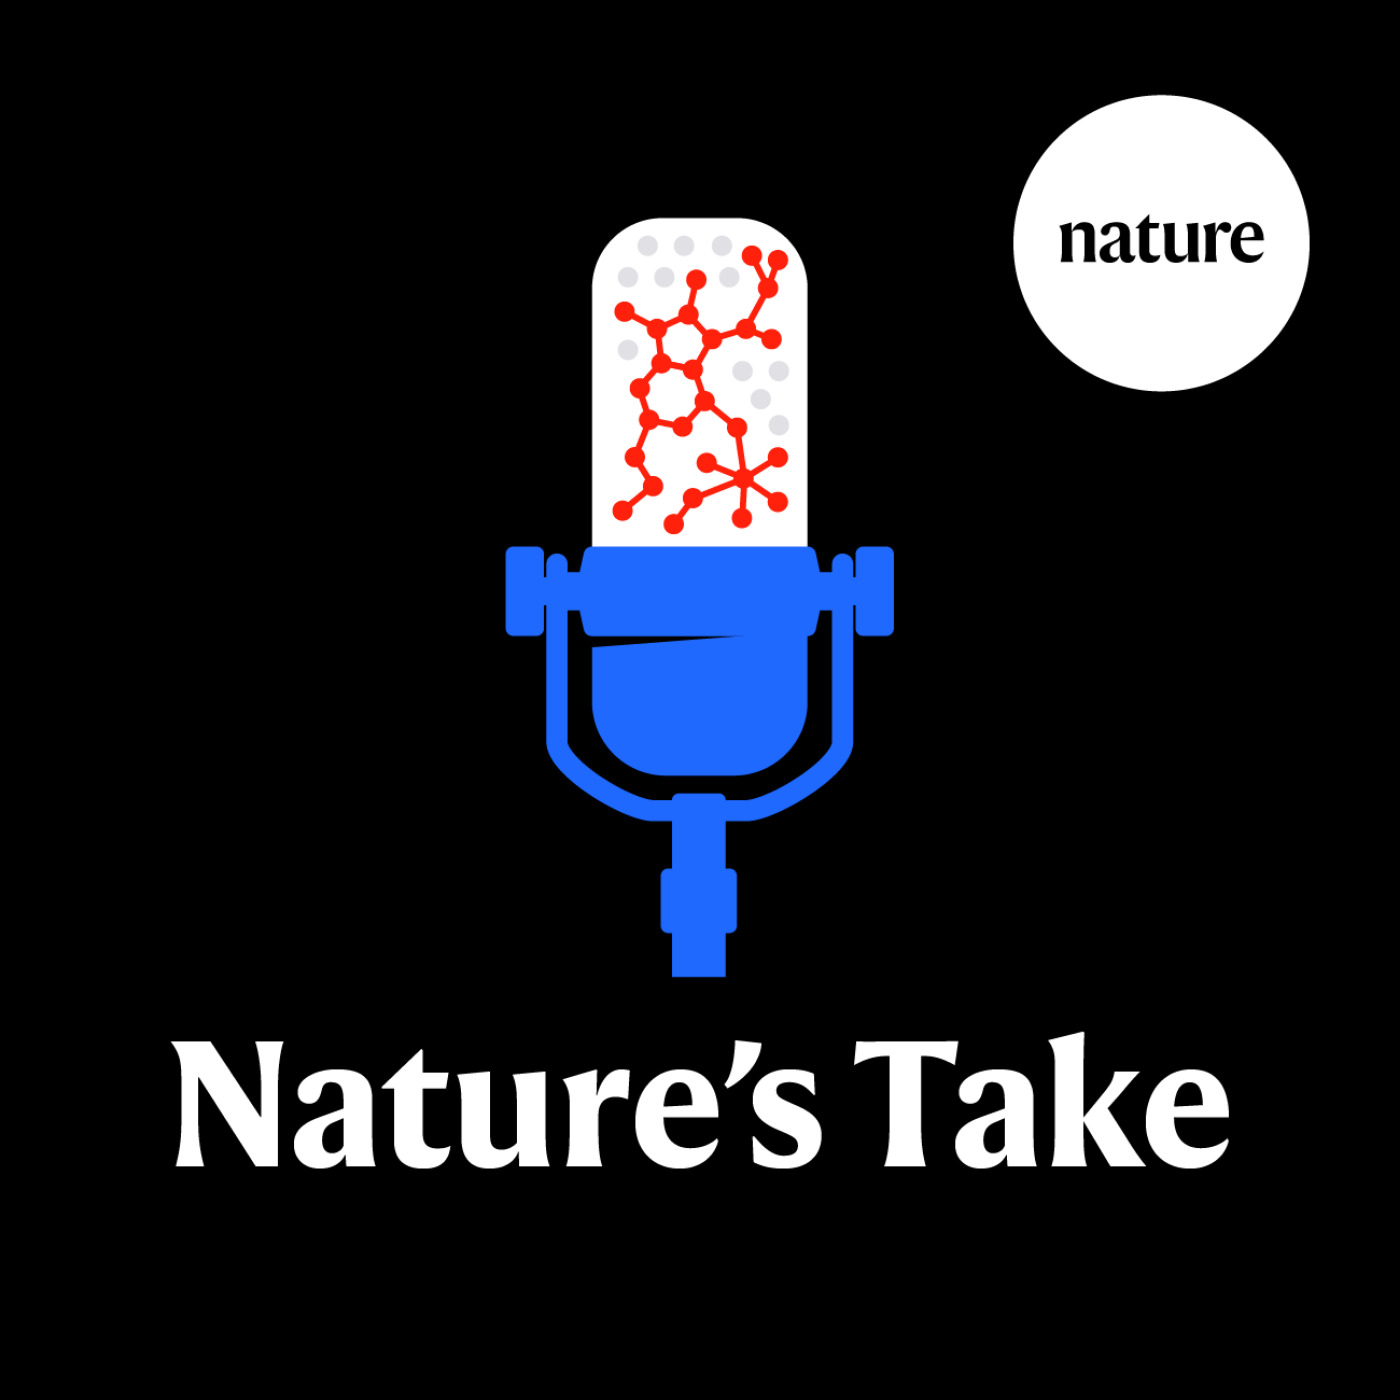 Nature’s Take: what’s next for the preprint revolution